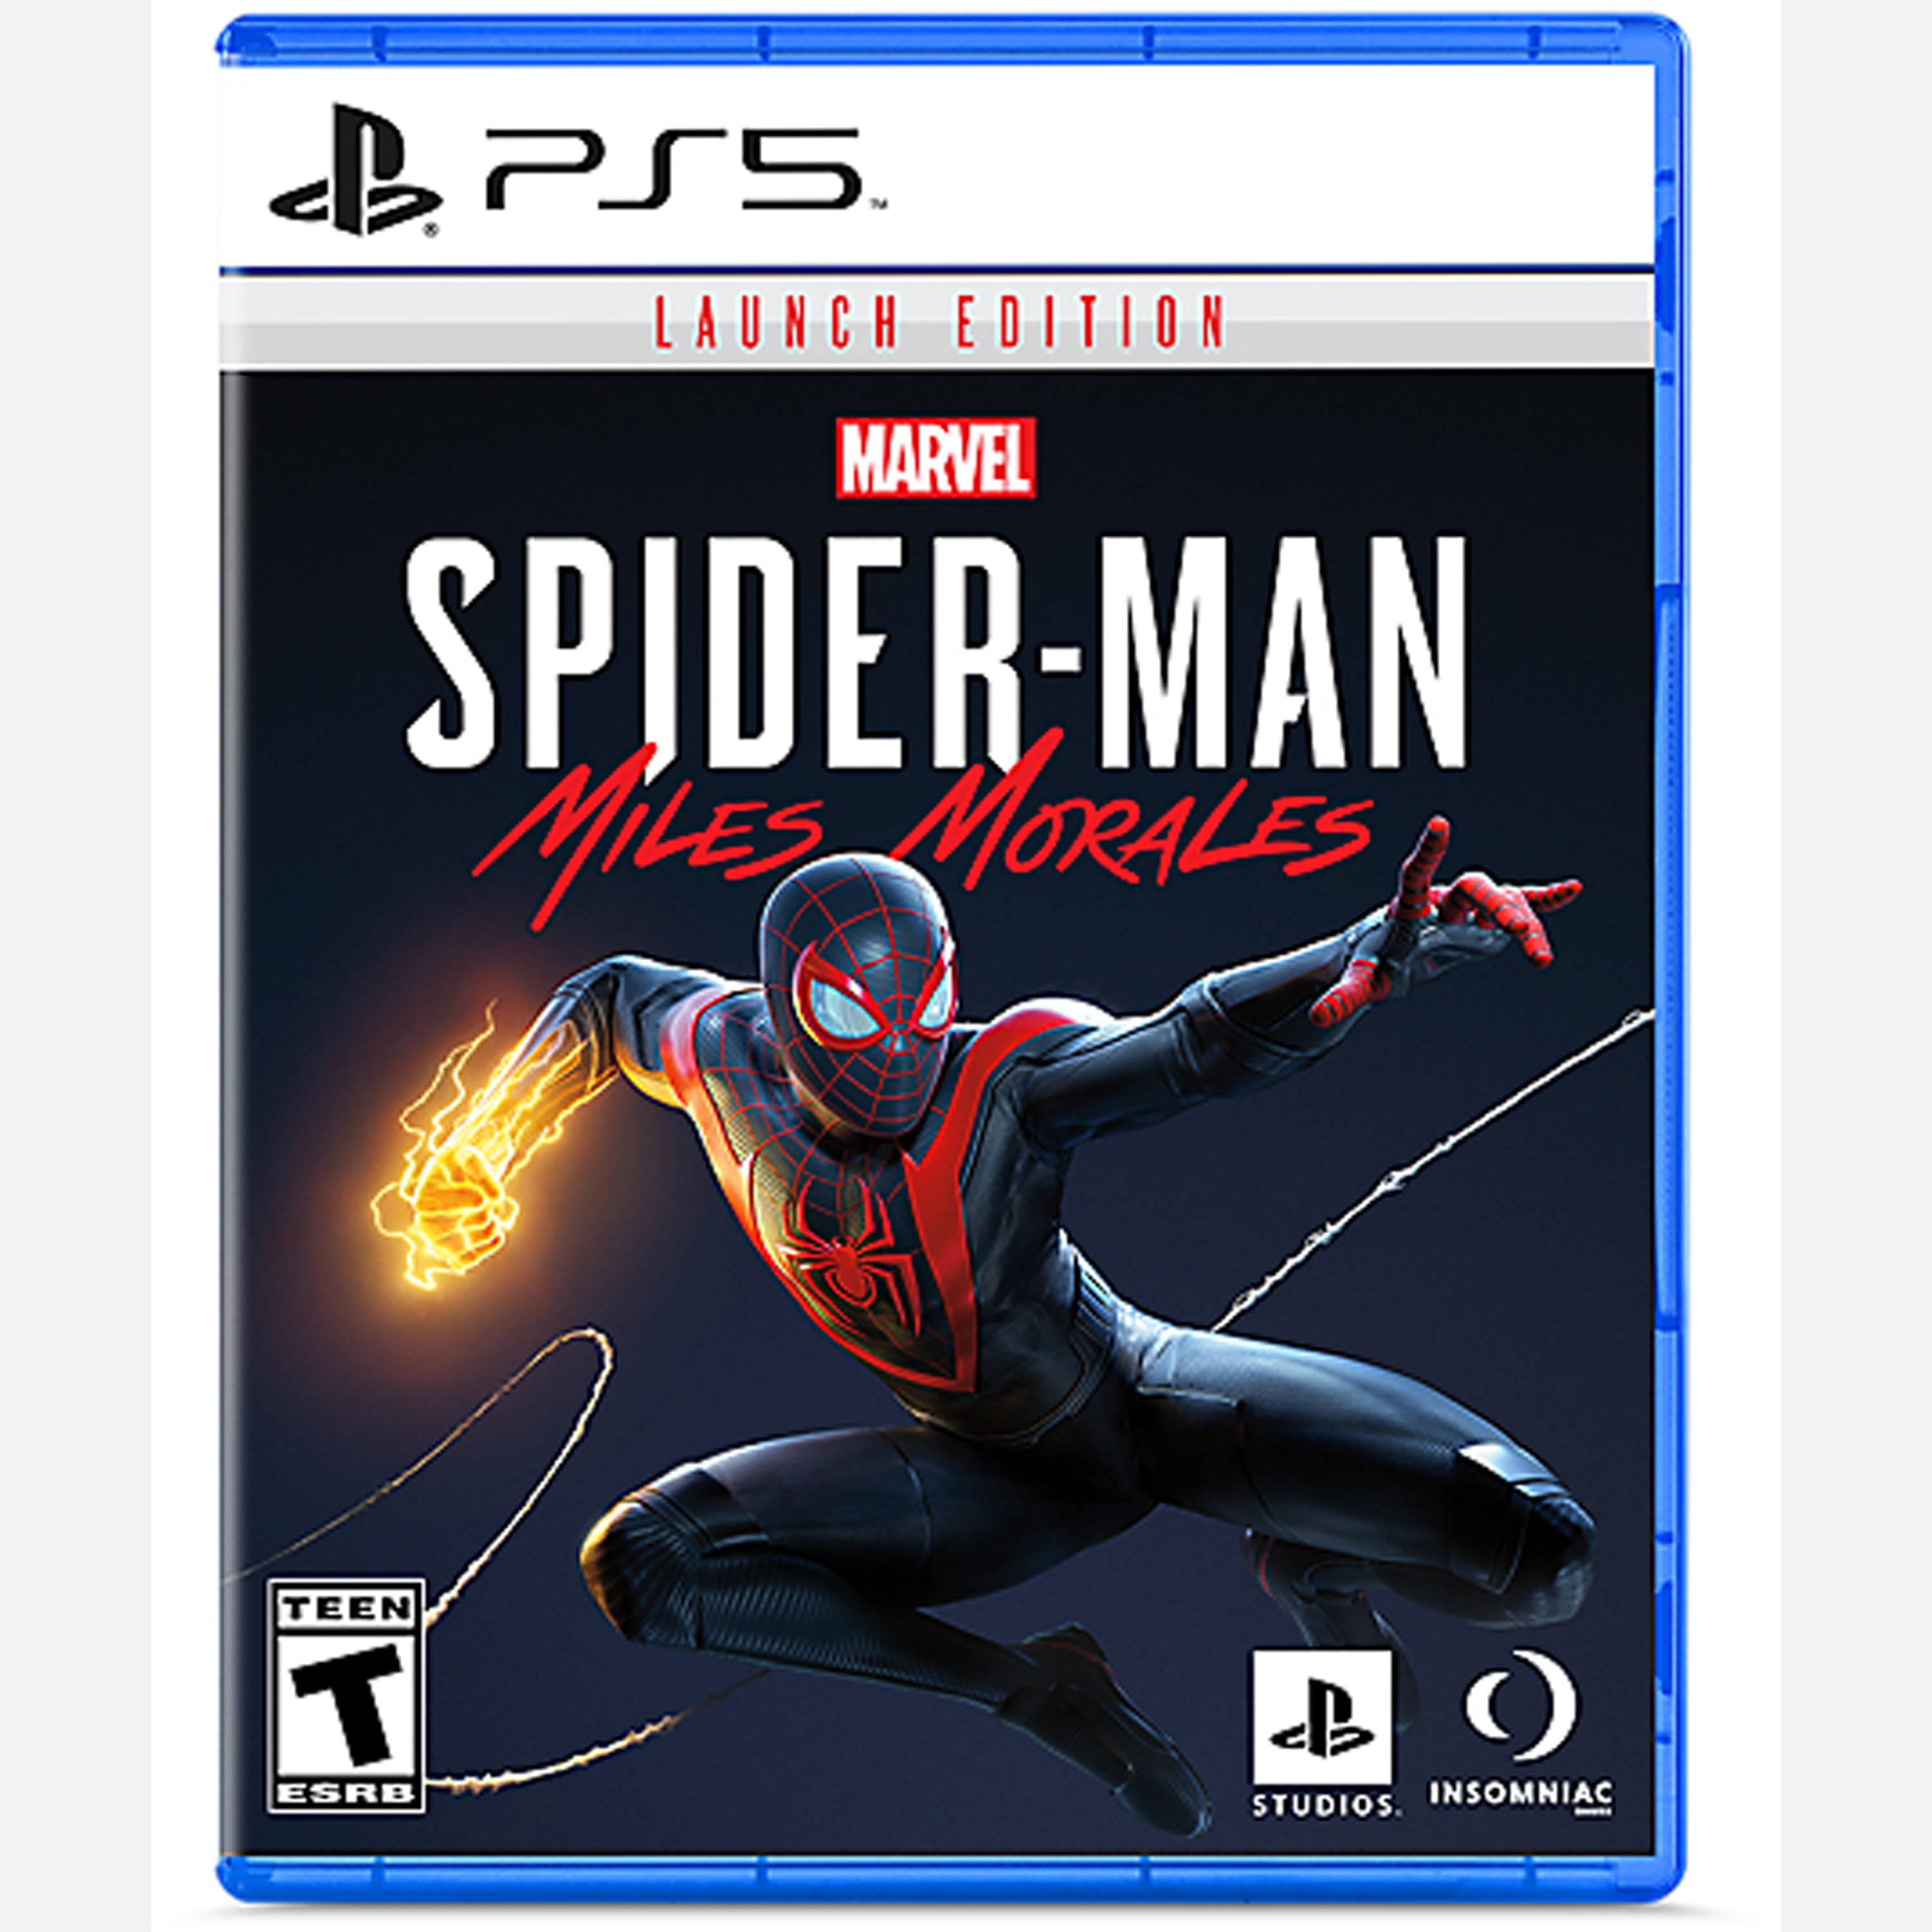 ps4 spiderman edition walmart